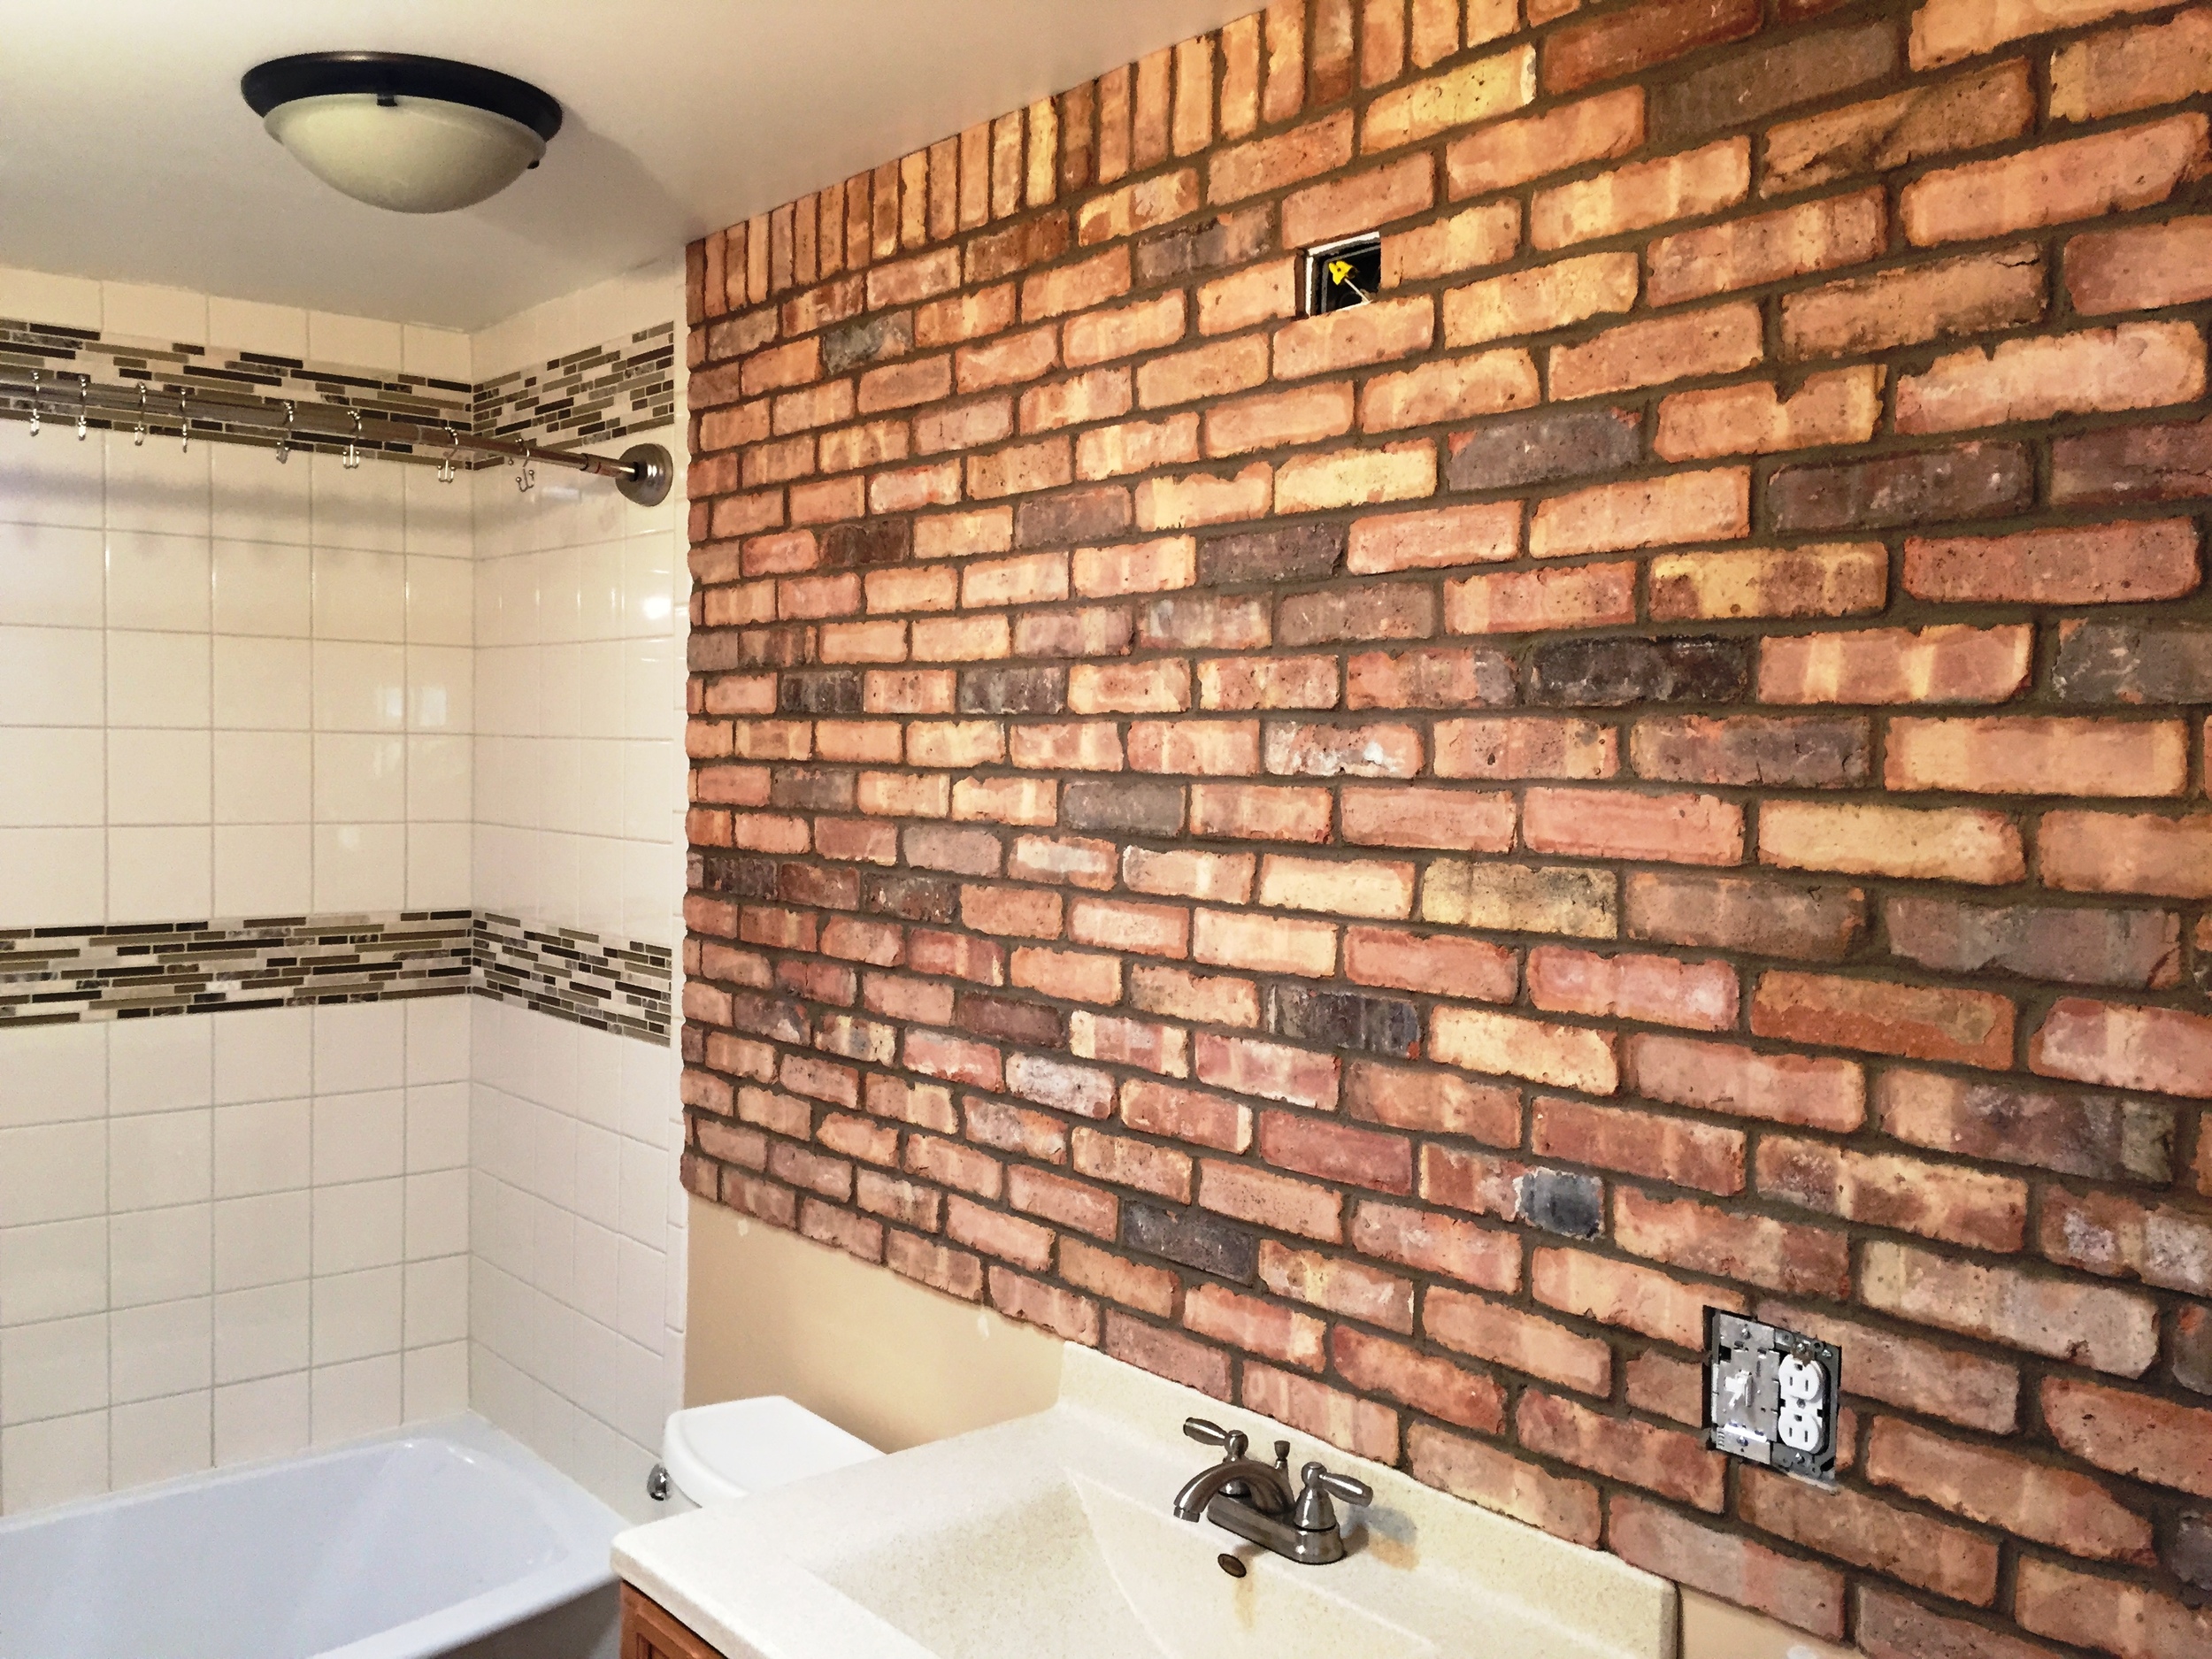  Bathroom walls. Downers Grove, IL 